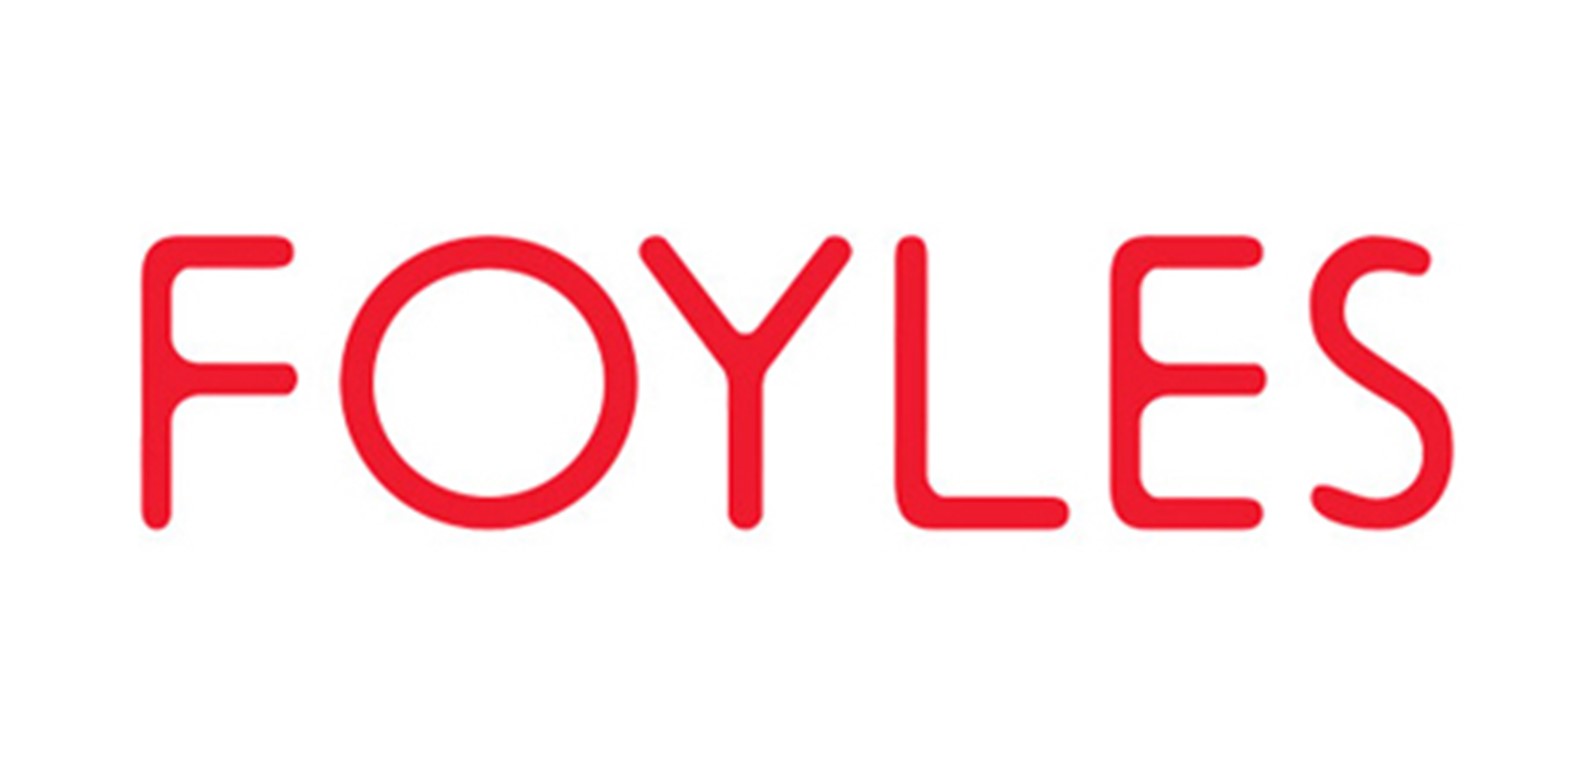 Foyles (W G Foyle Ltd) London Charing Cross